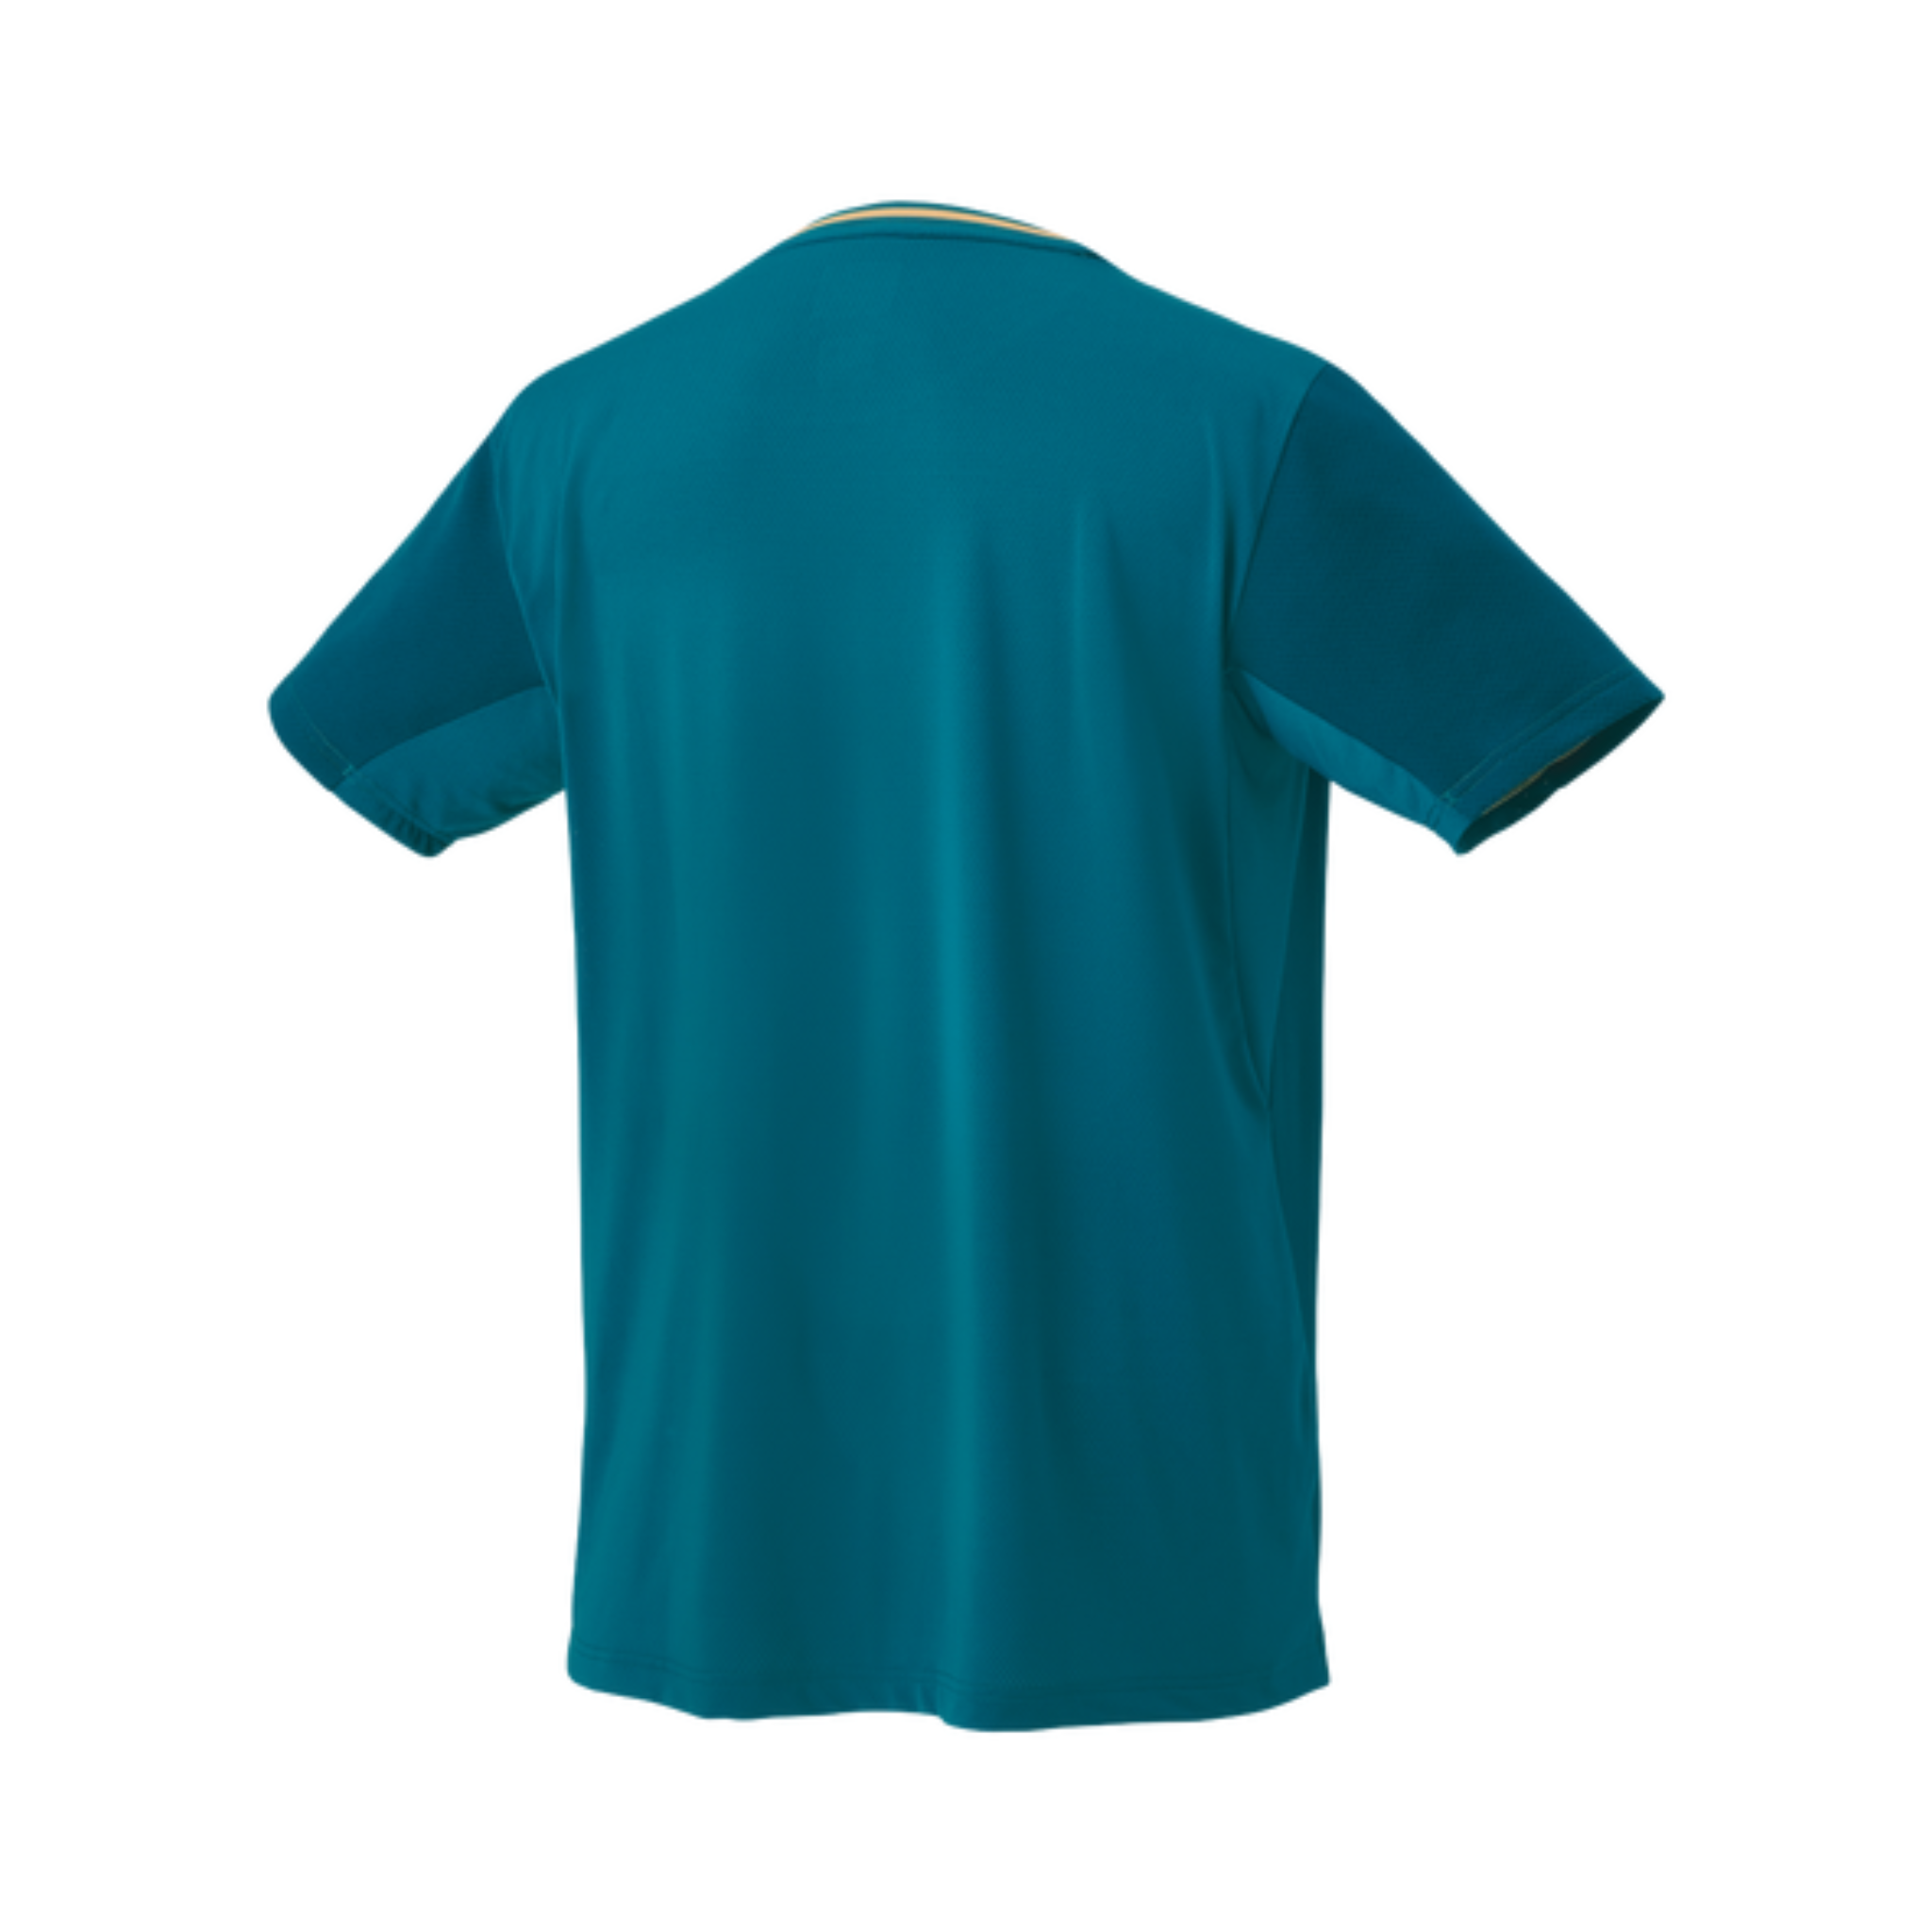 Yonex  Men's Crew Neck Shirt - Blue/Green